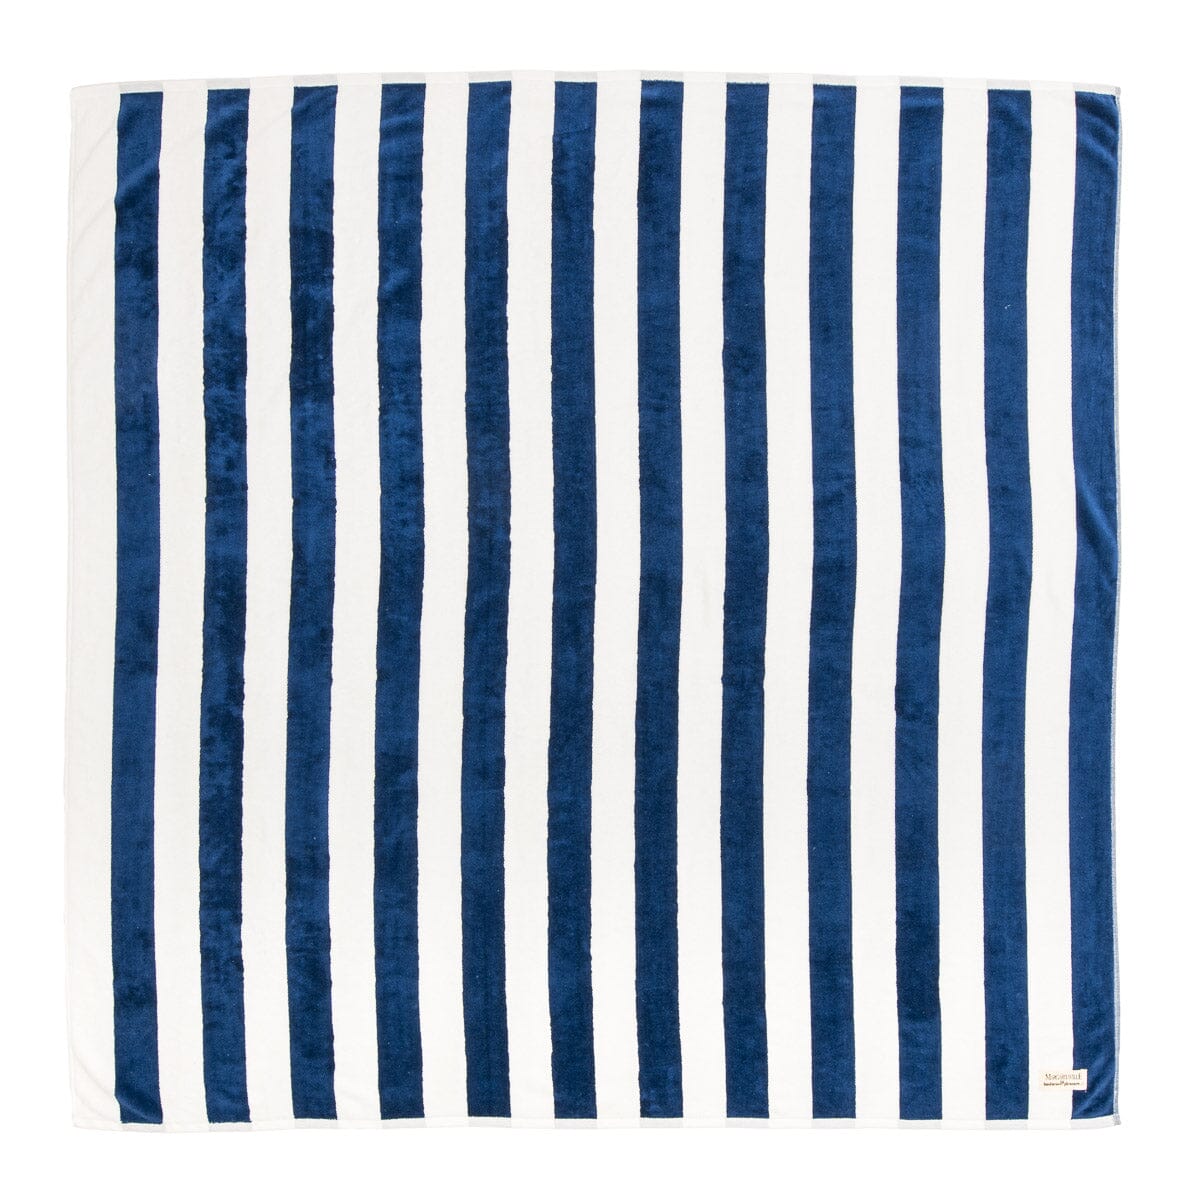 The Havana Blanket - Continental Drifter Stripe Havana Beach Blanket Business & Pleasure Co 